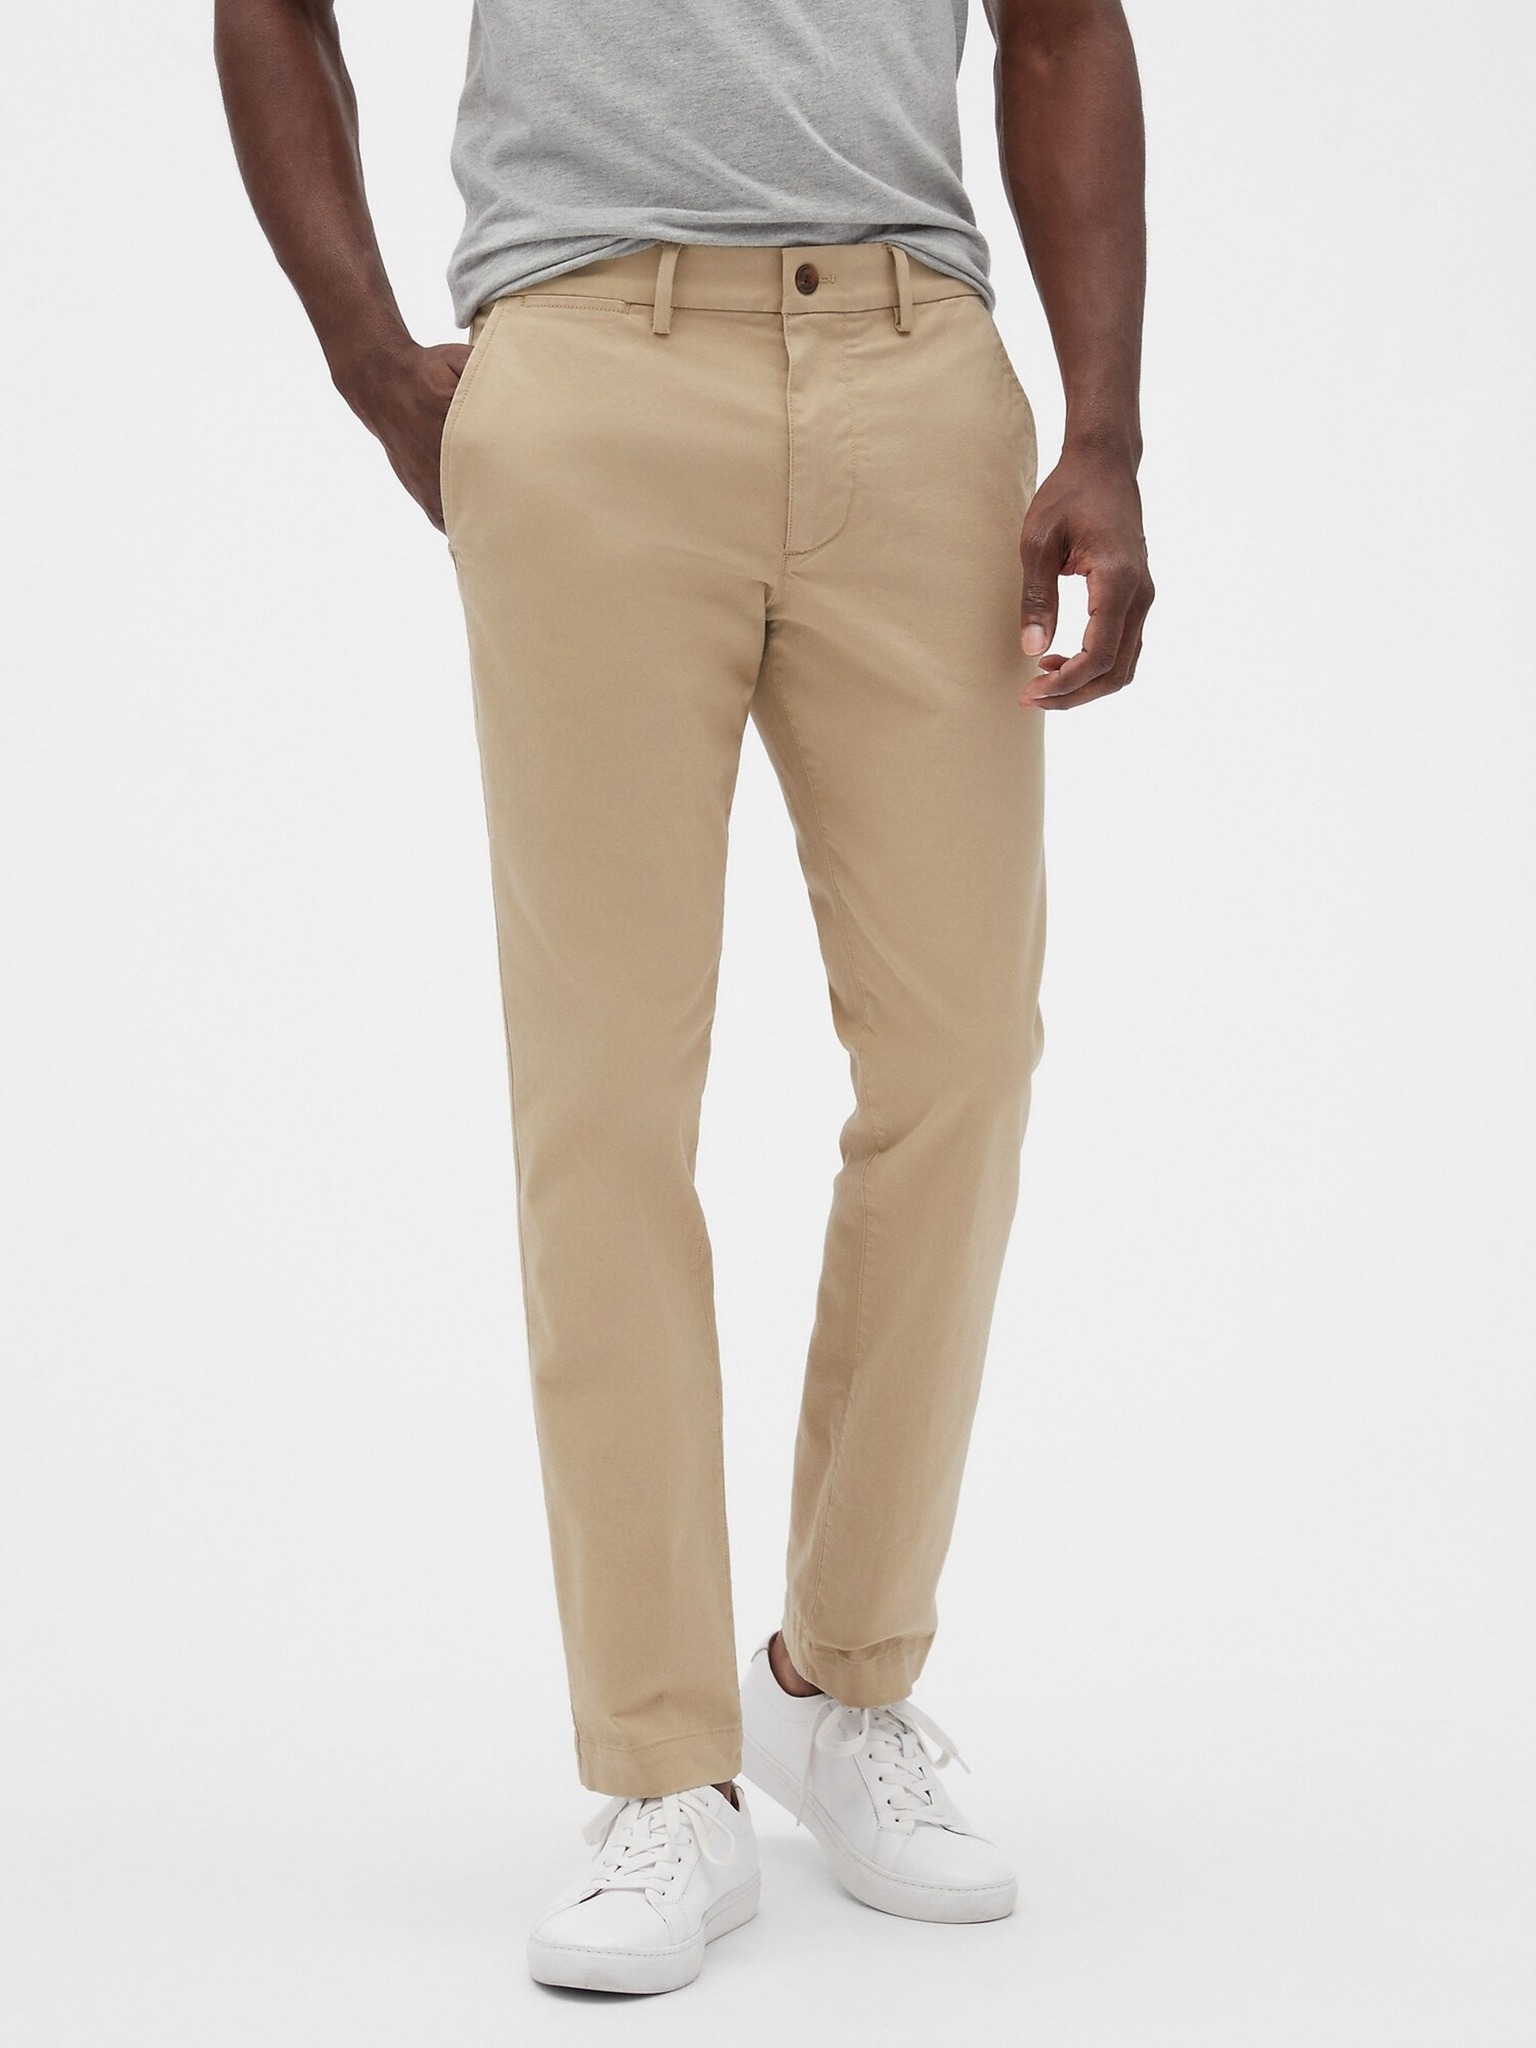 Gap Mens Trousers Linen Cotton Size 36 x 32 Green Slim Fit | eBay